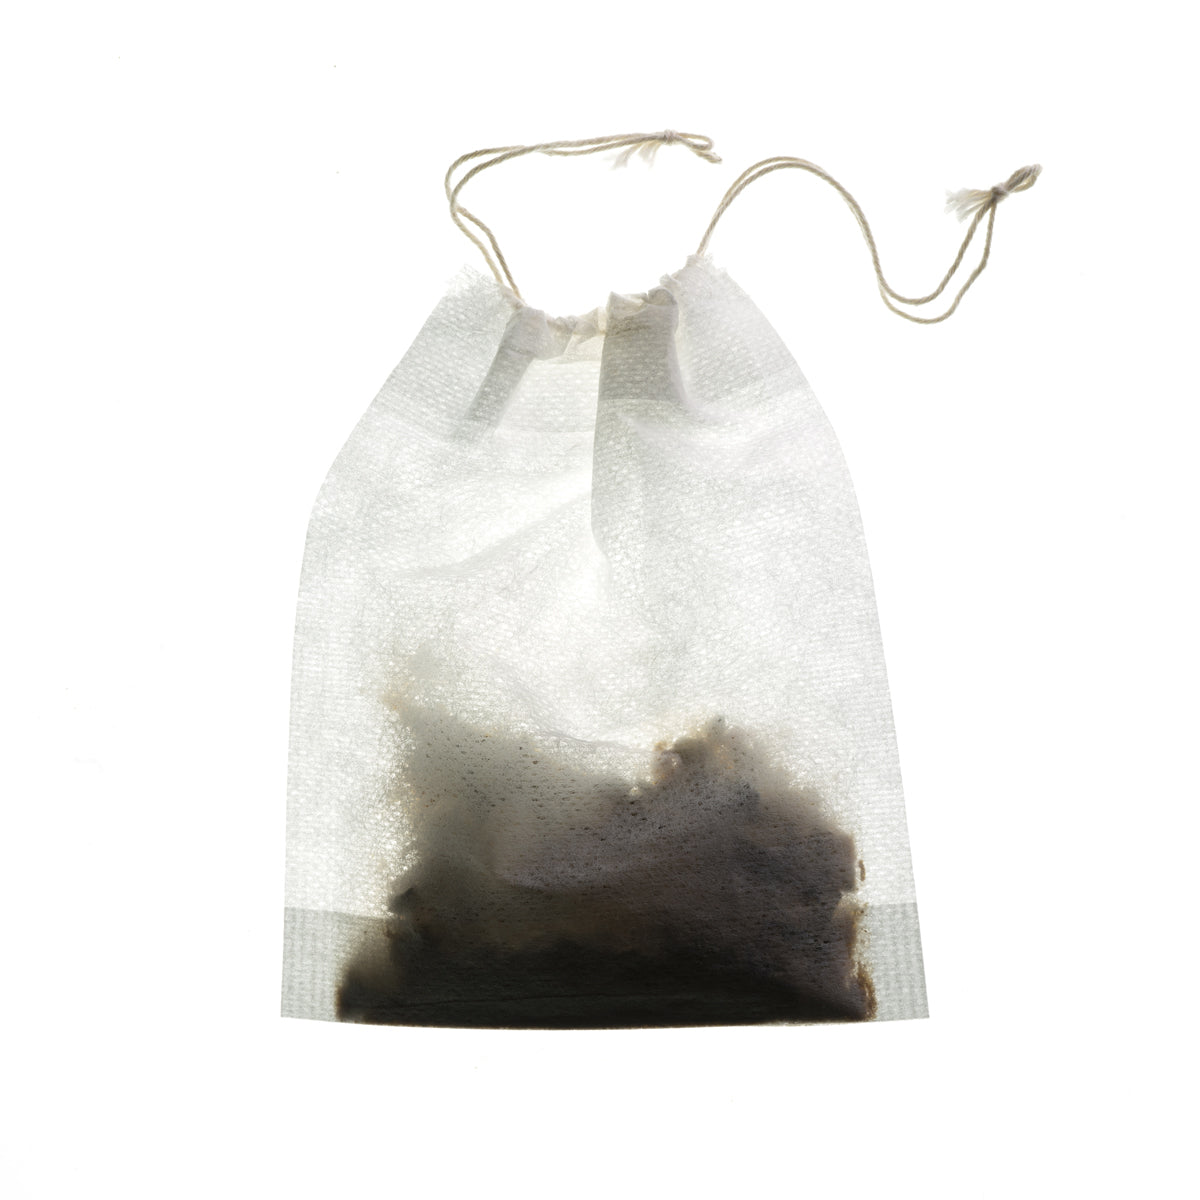 Single tea bag of MOVE 3PM tea by noosha